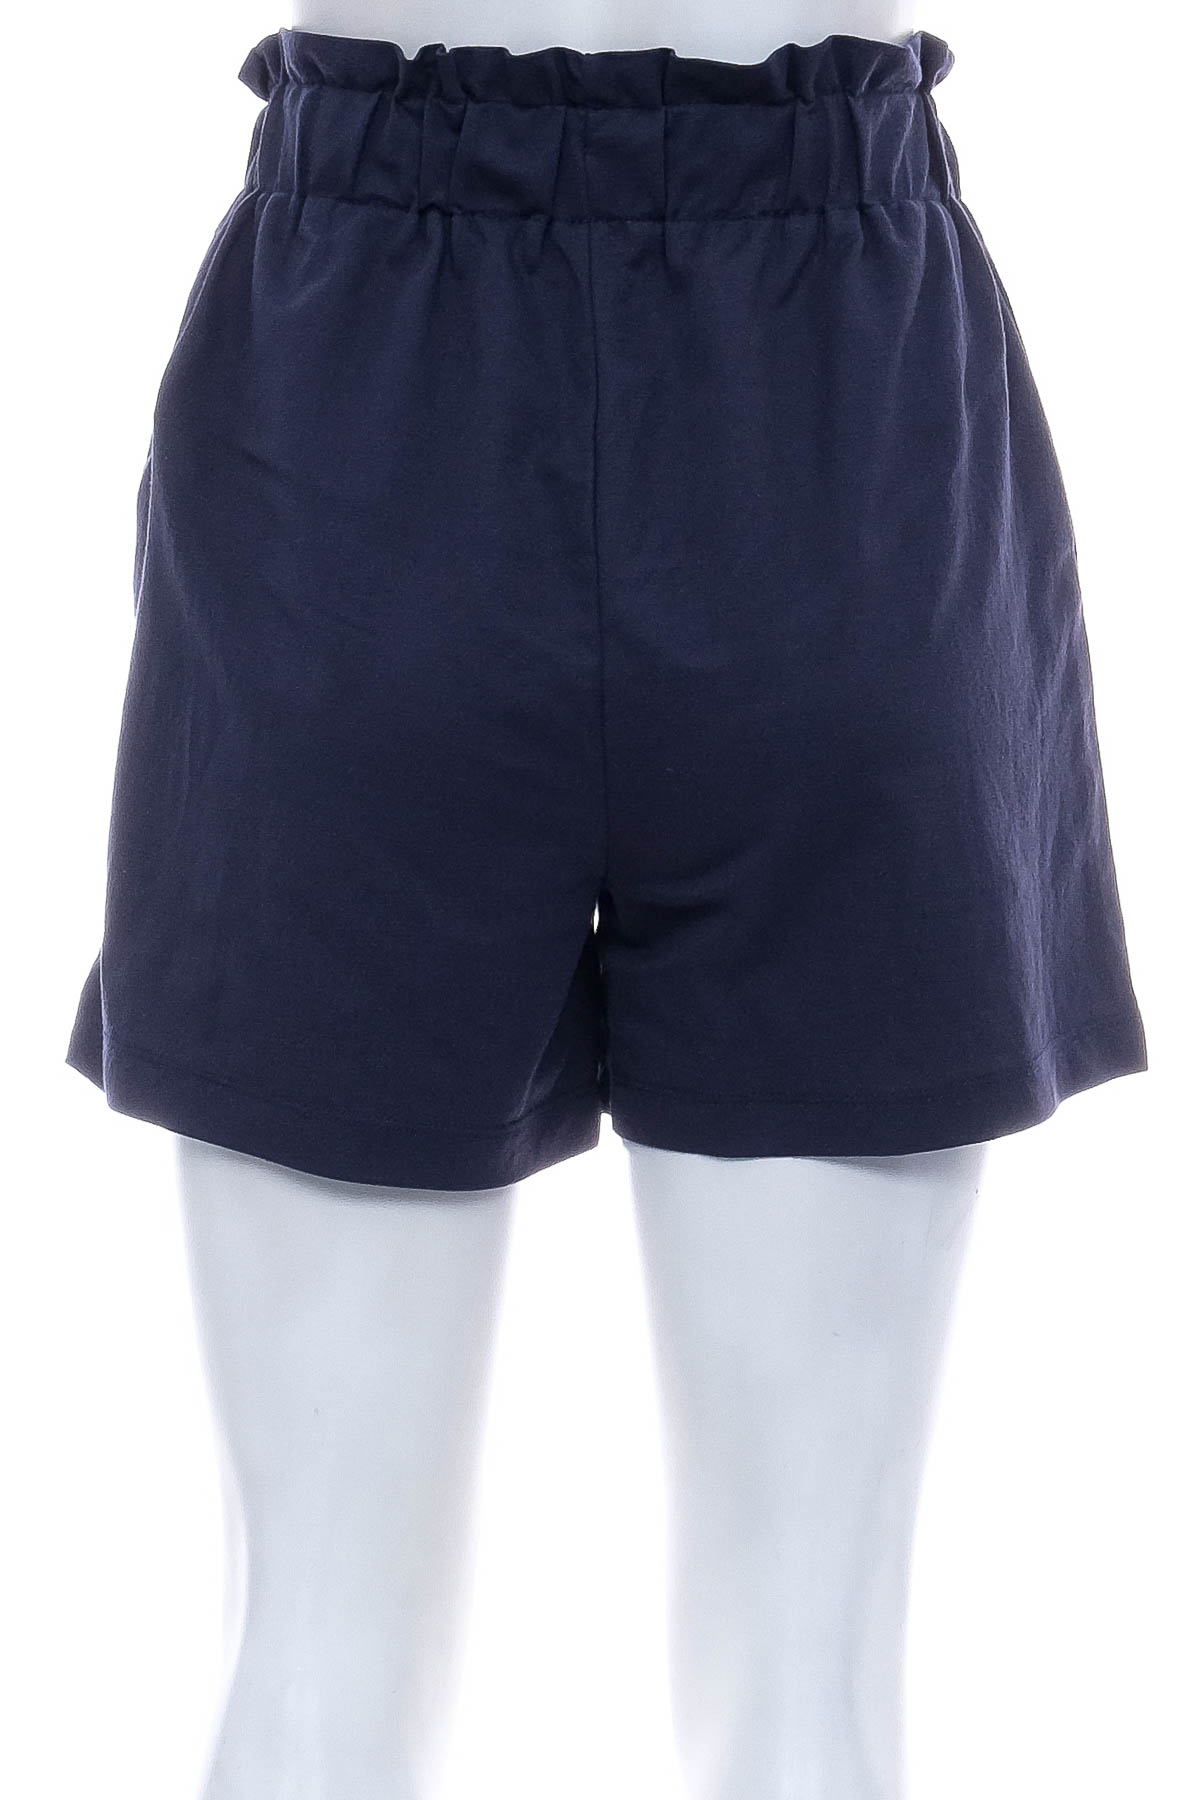 Female shorts - Anko - 1